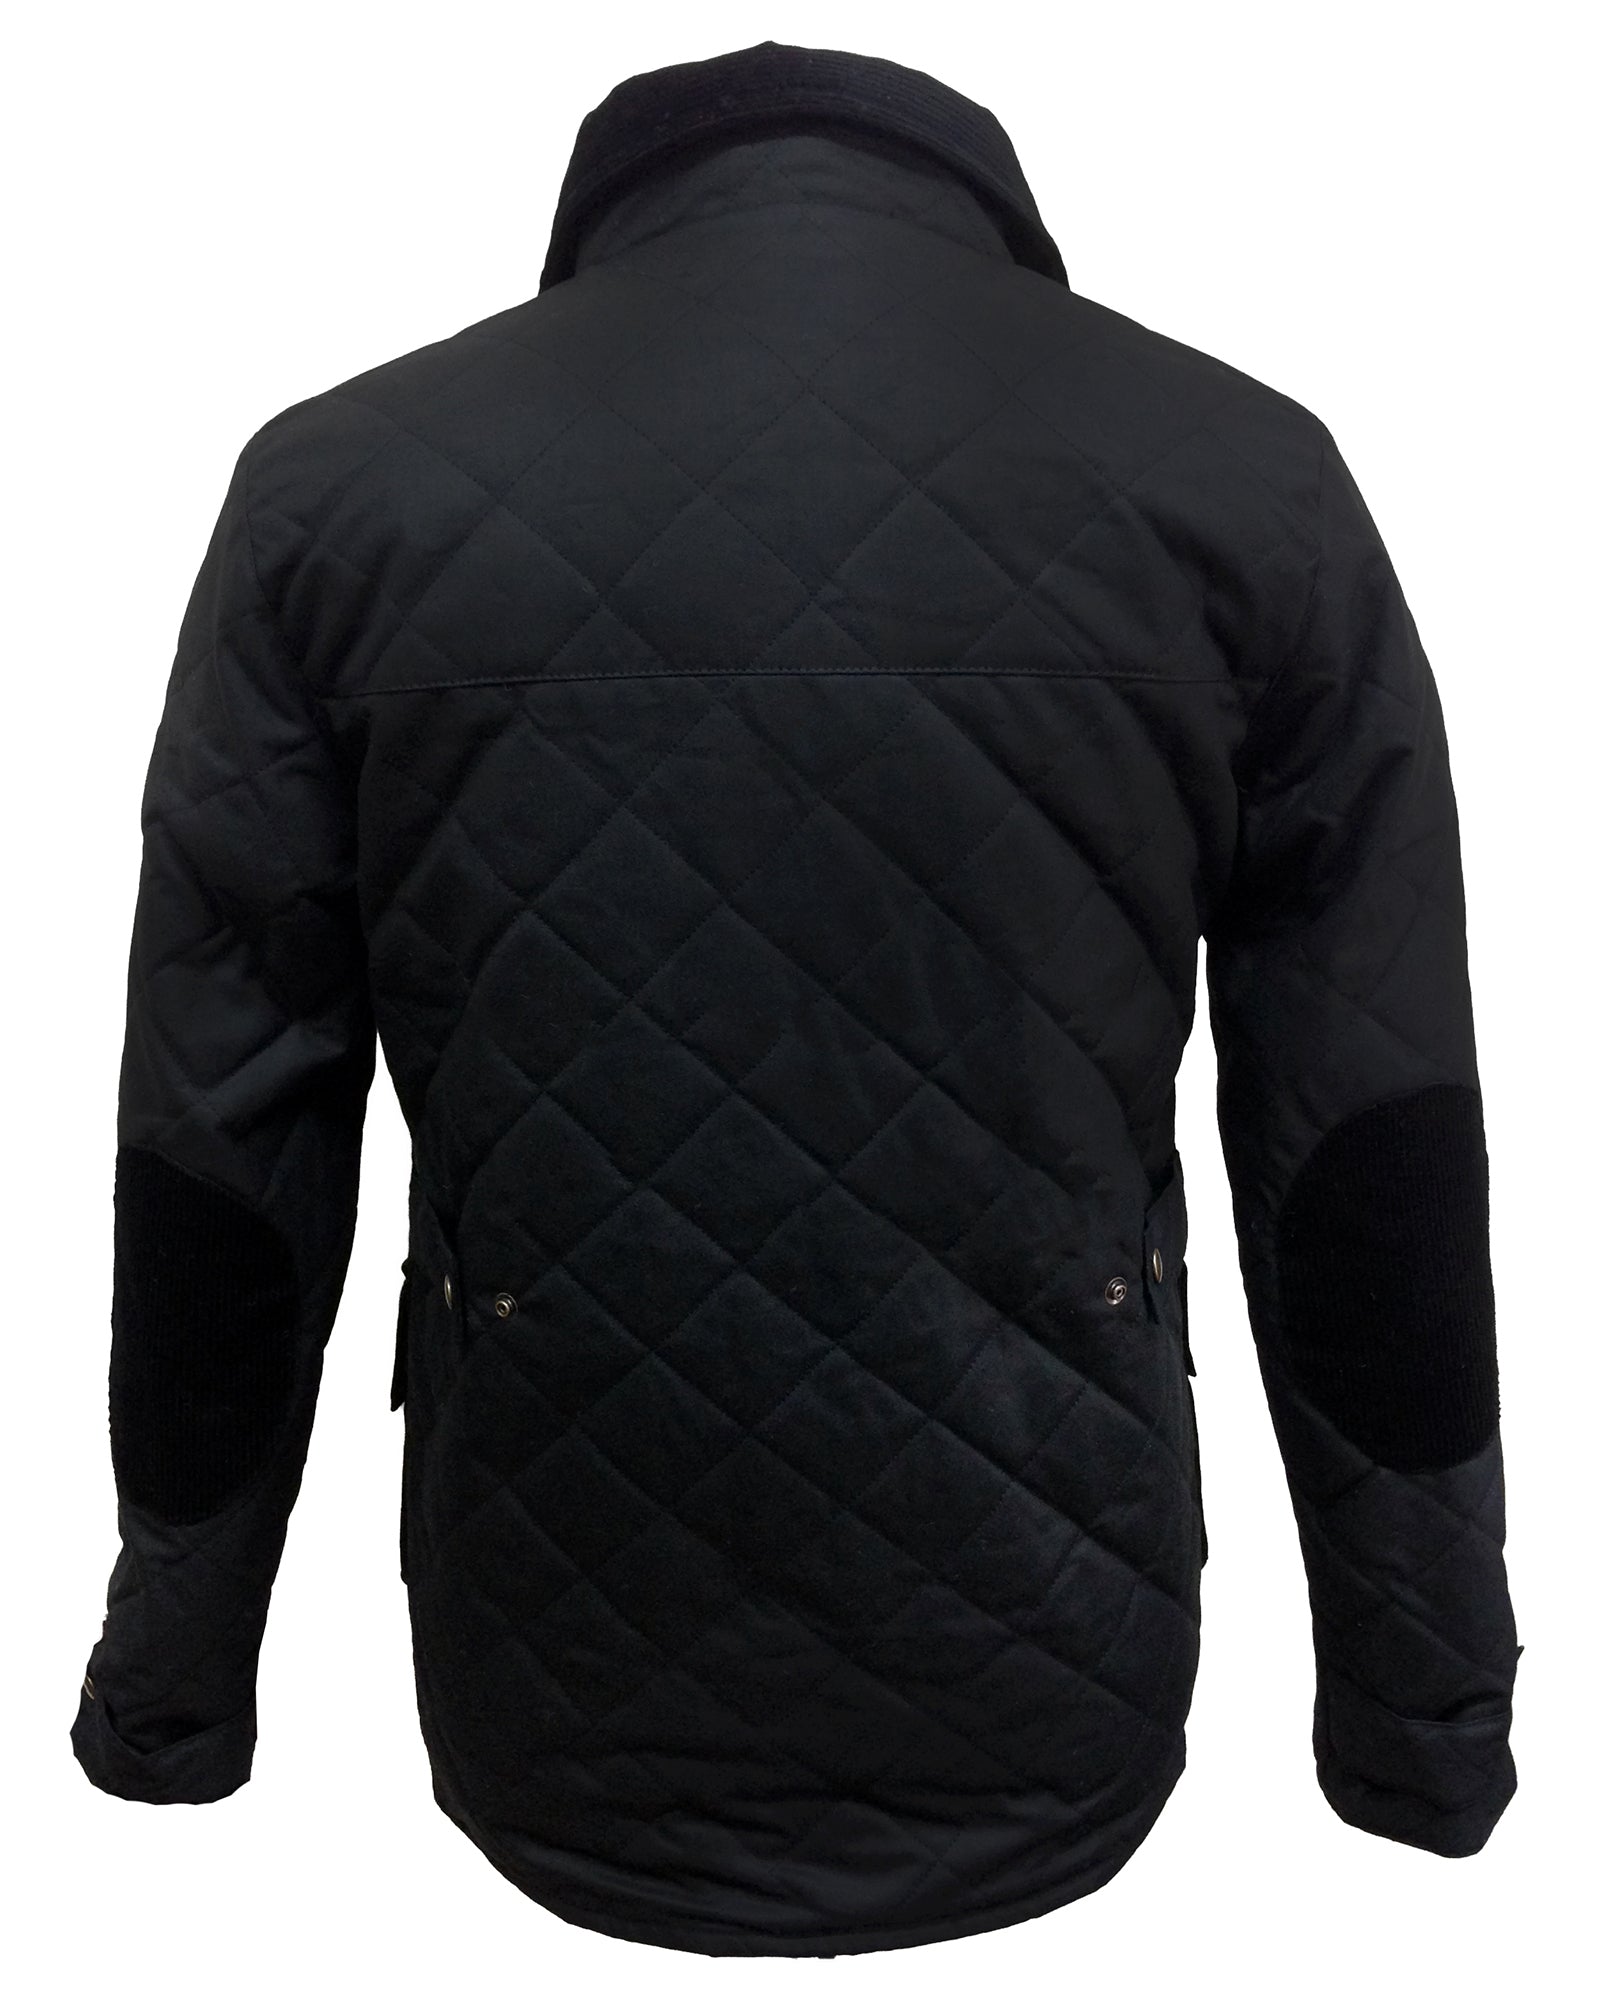 Regents View Men Premium Diamond Quilted Wax Cotton Jacket - Black